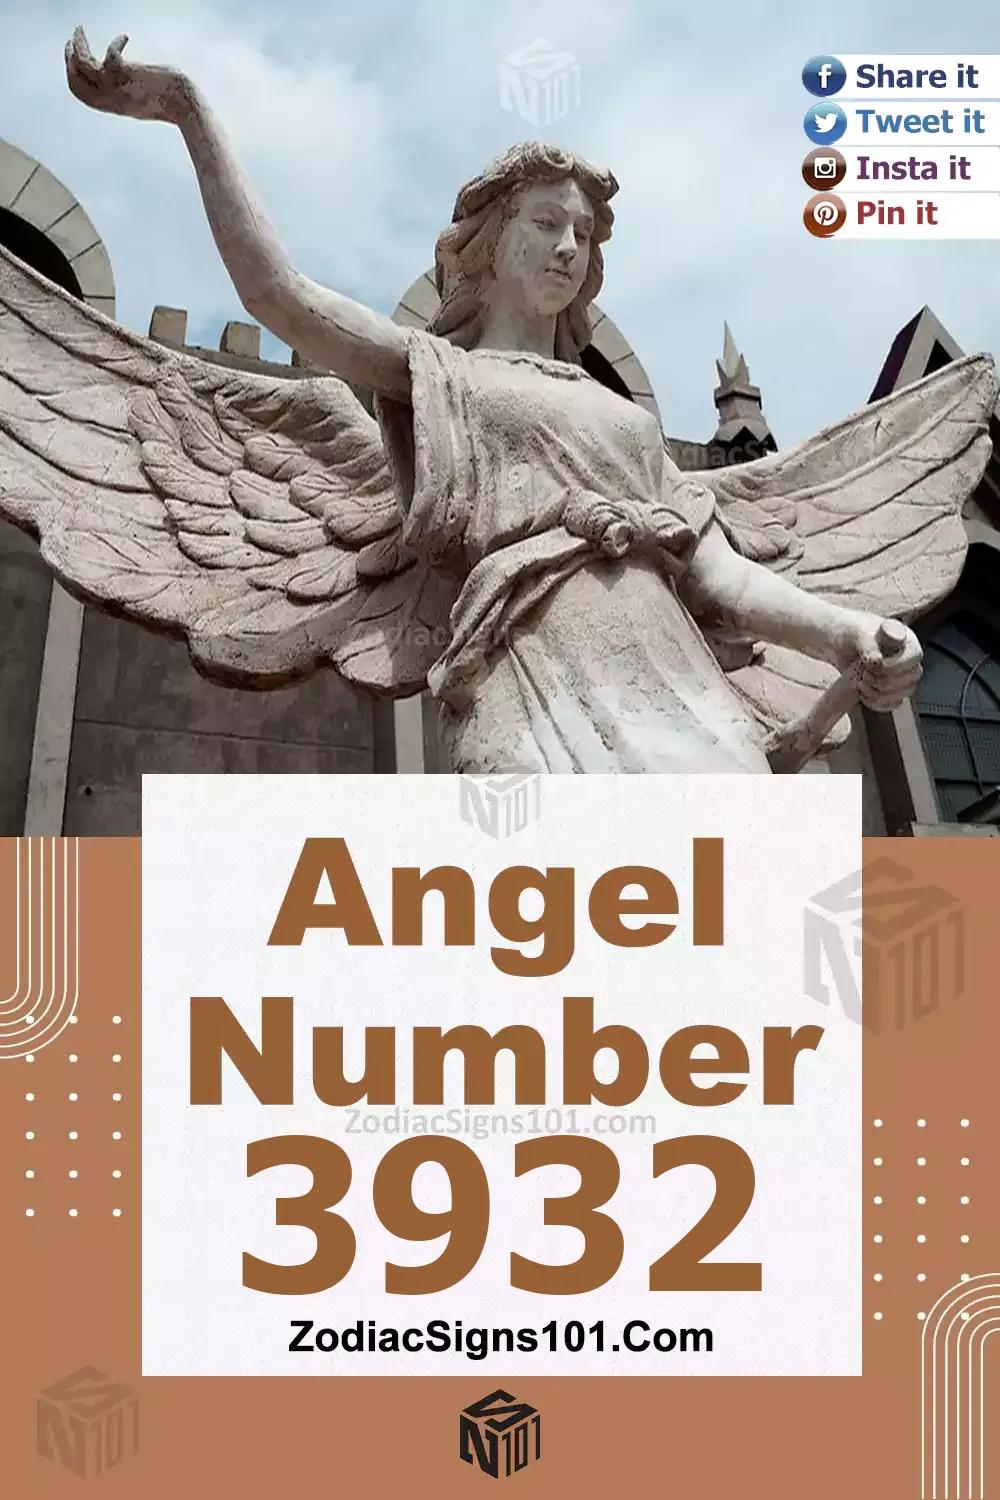 3932-Angel-Number-Meaning.jpg